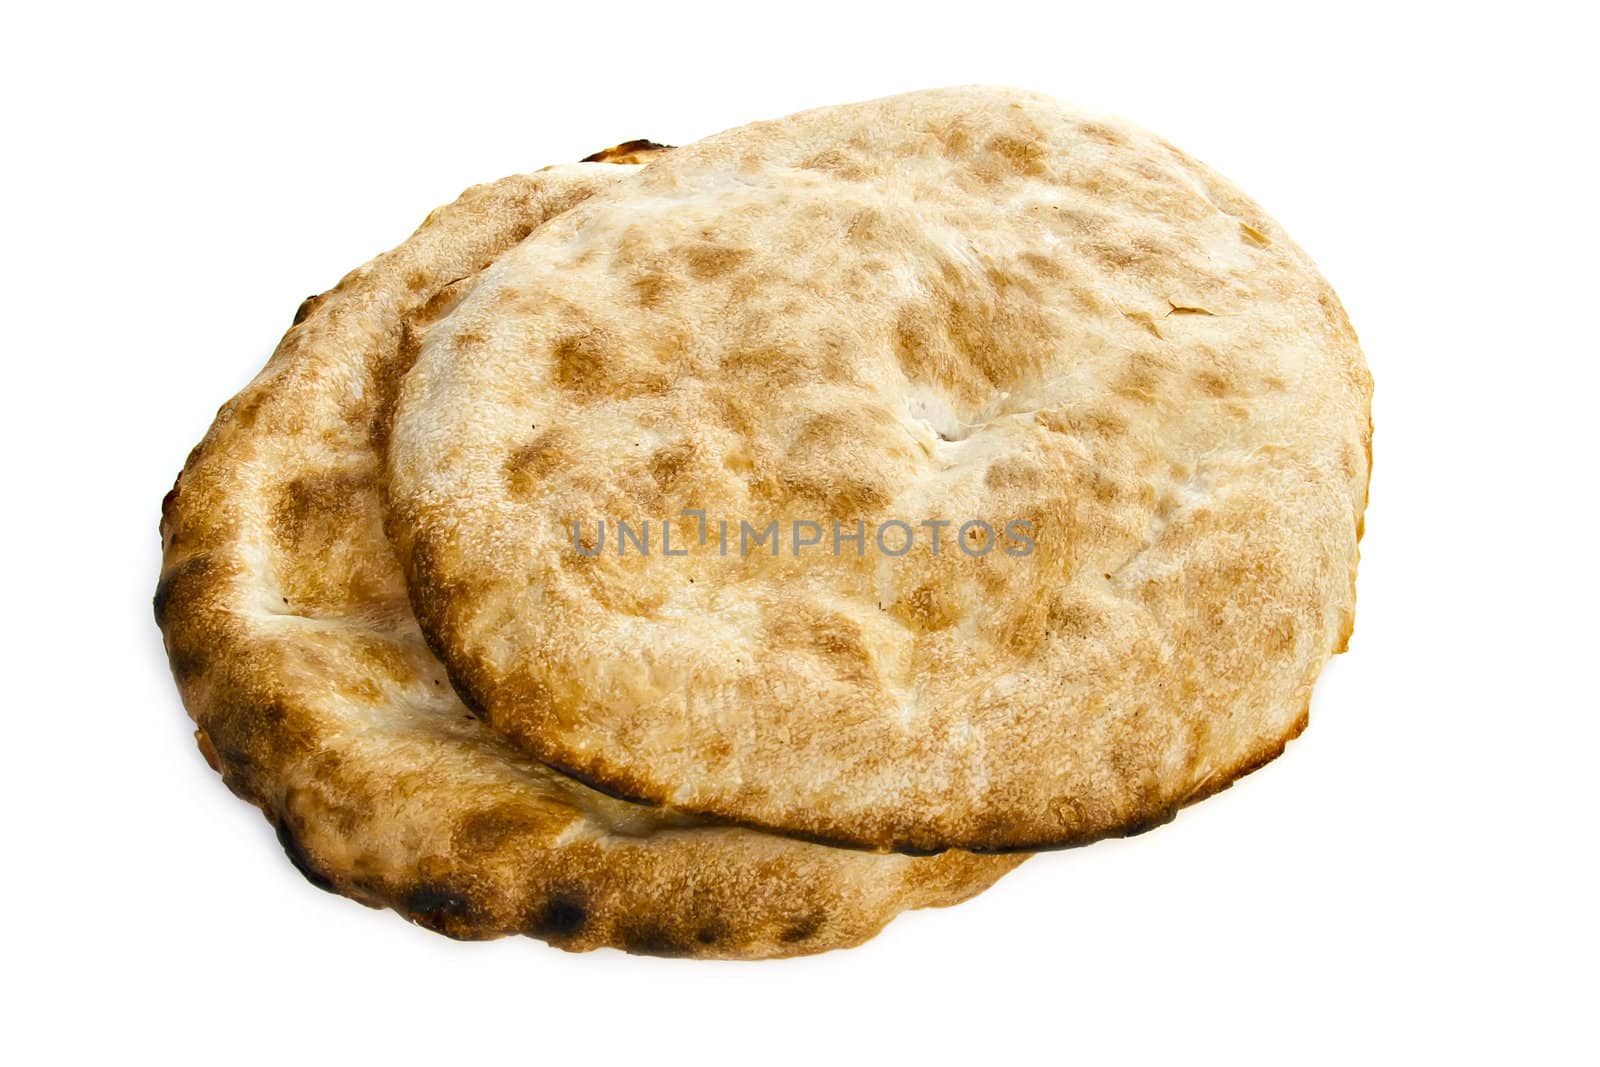 Two pita bread on a white background.
